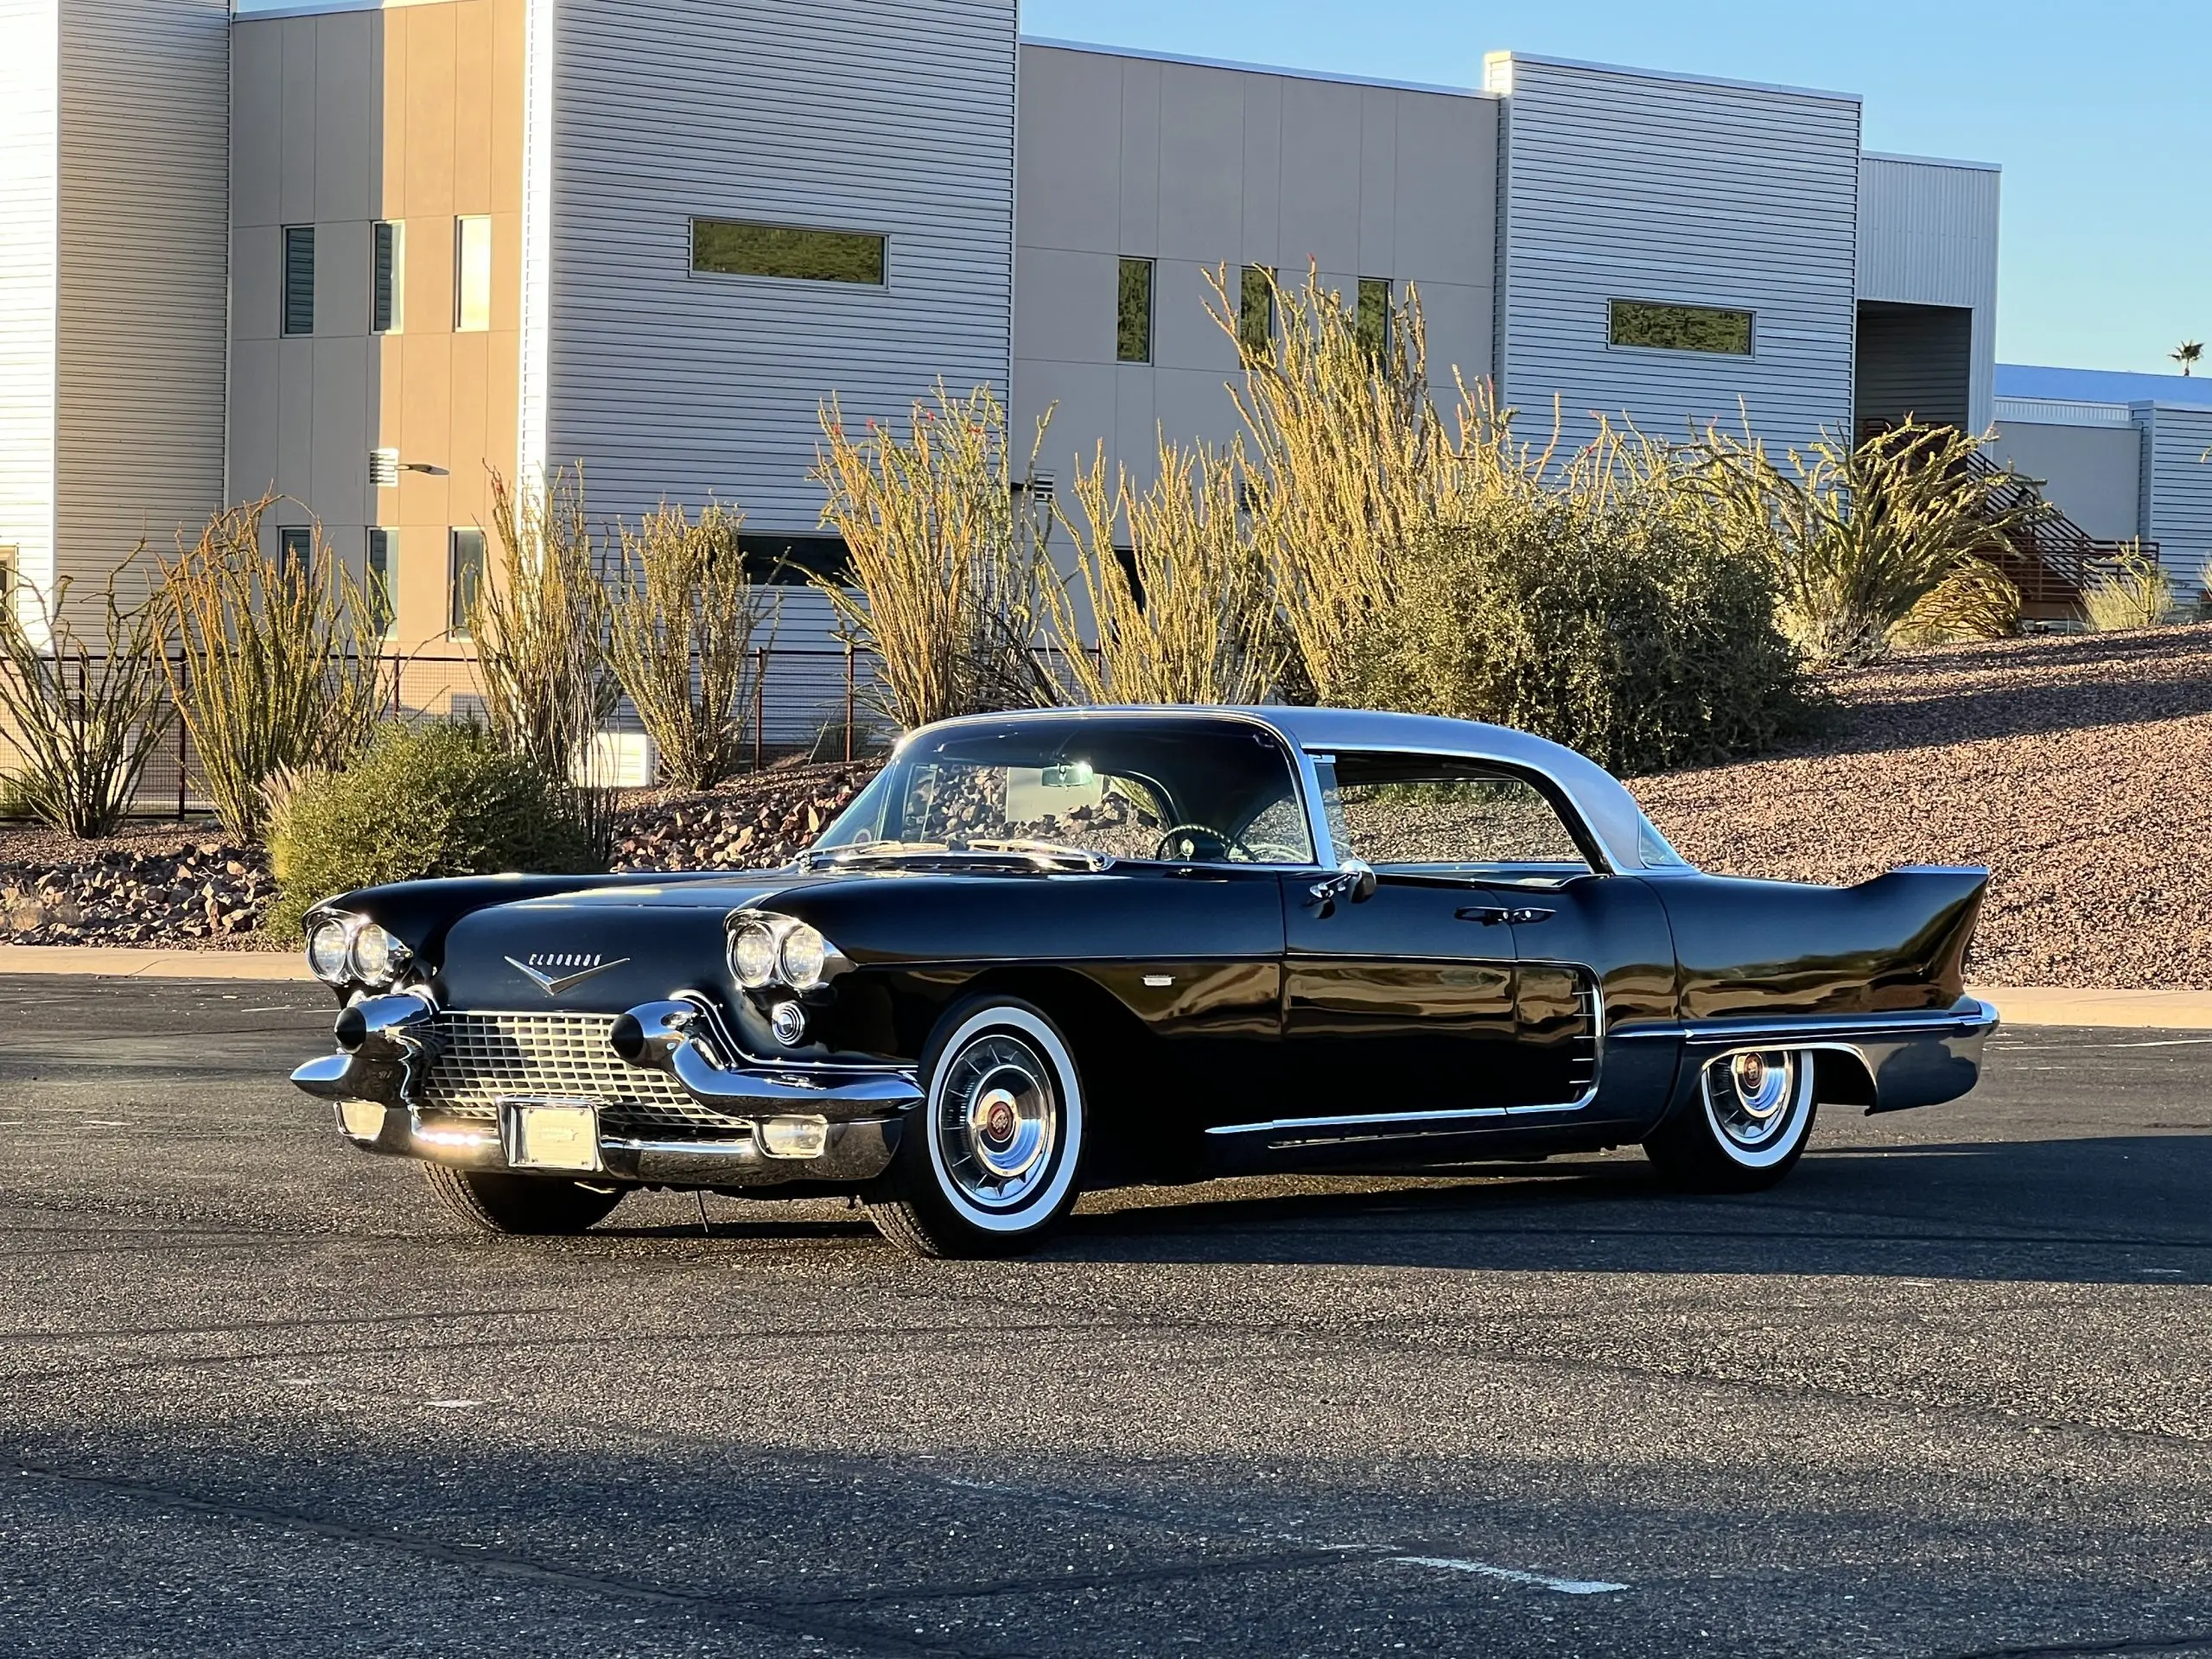 The Iconic 1957 Cadillac Eldorado Biarritz A Classic American Beauty